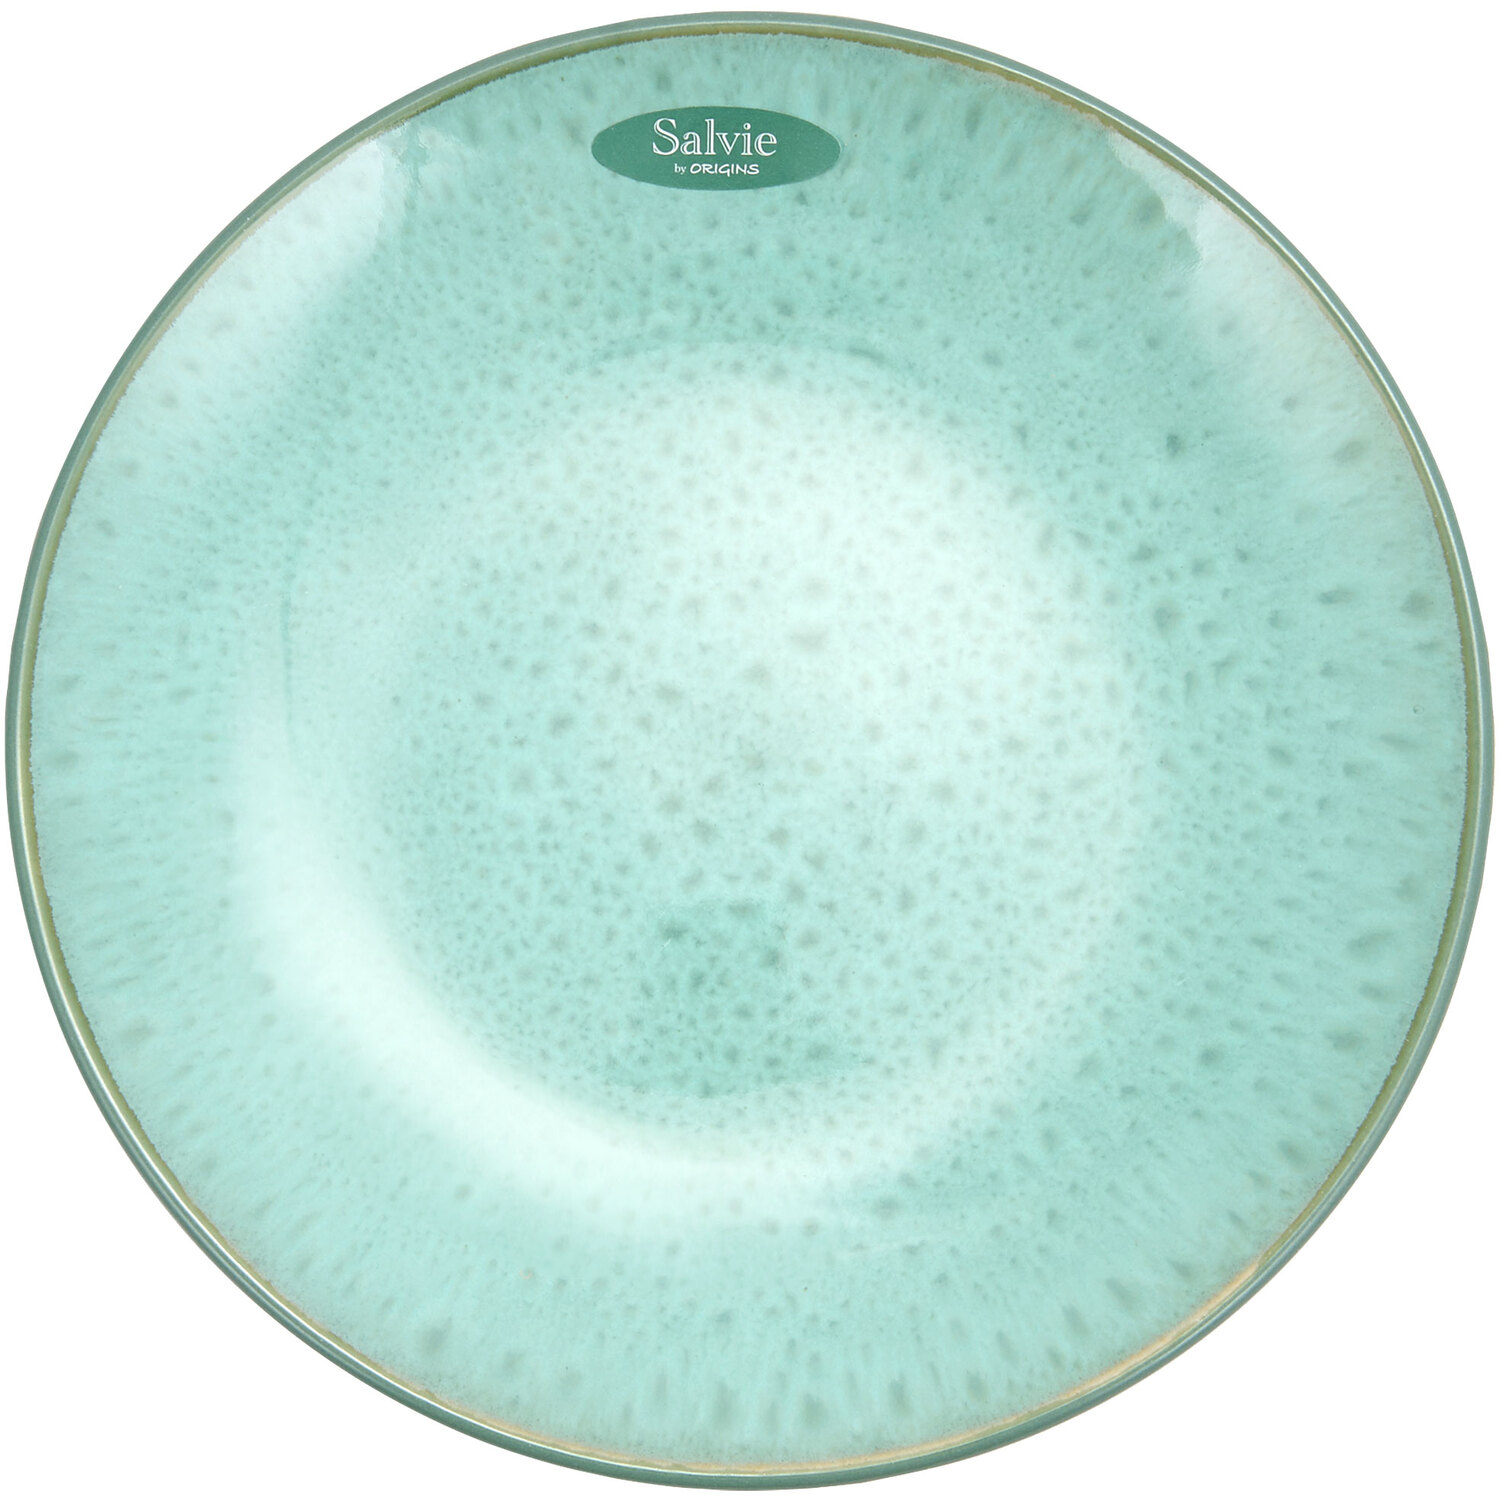 Salvie Reactive Glaze Plate - Sea Green Image 3